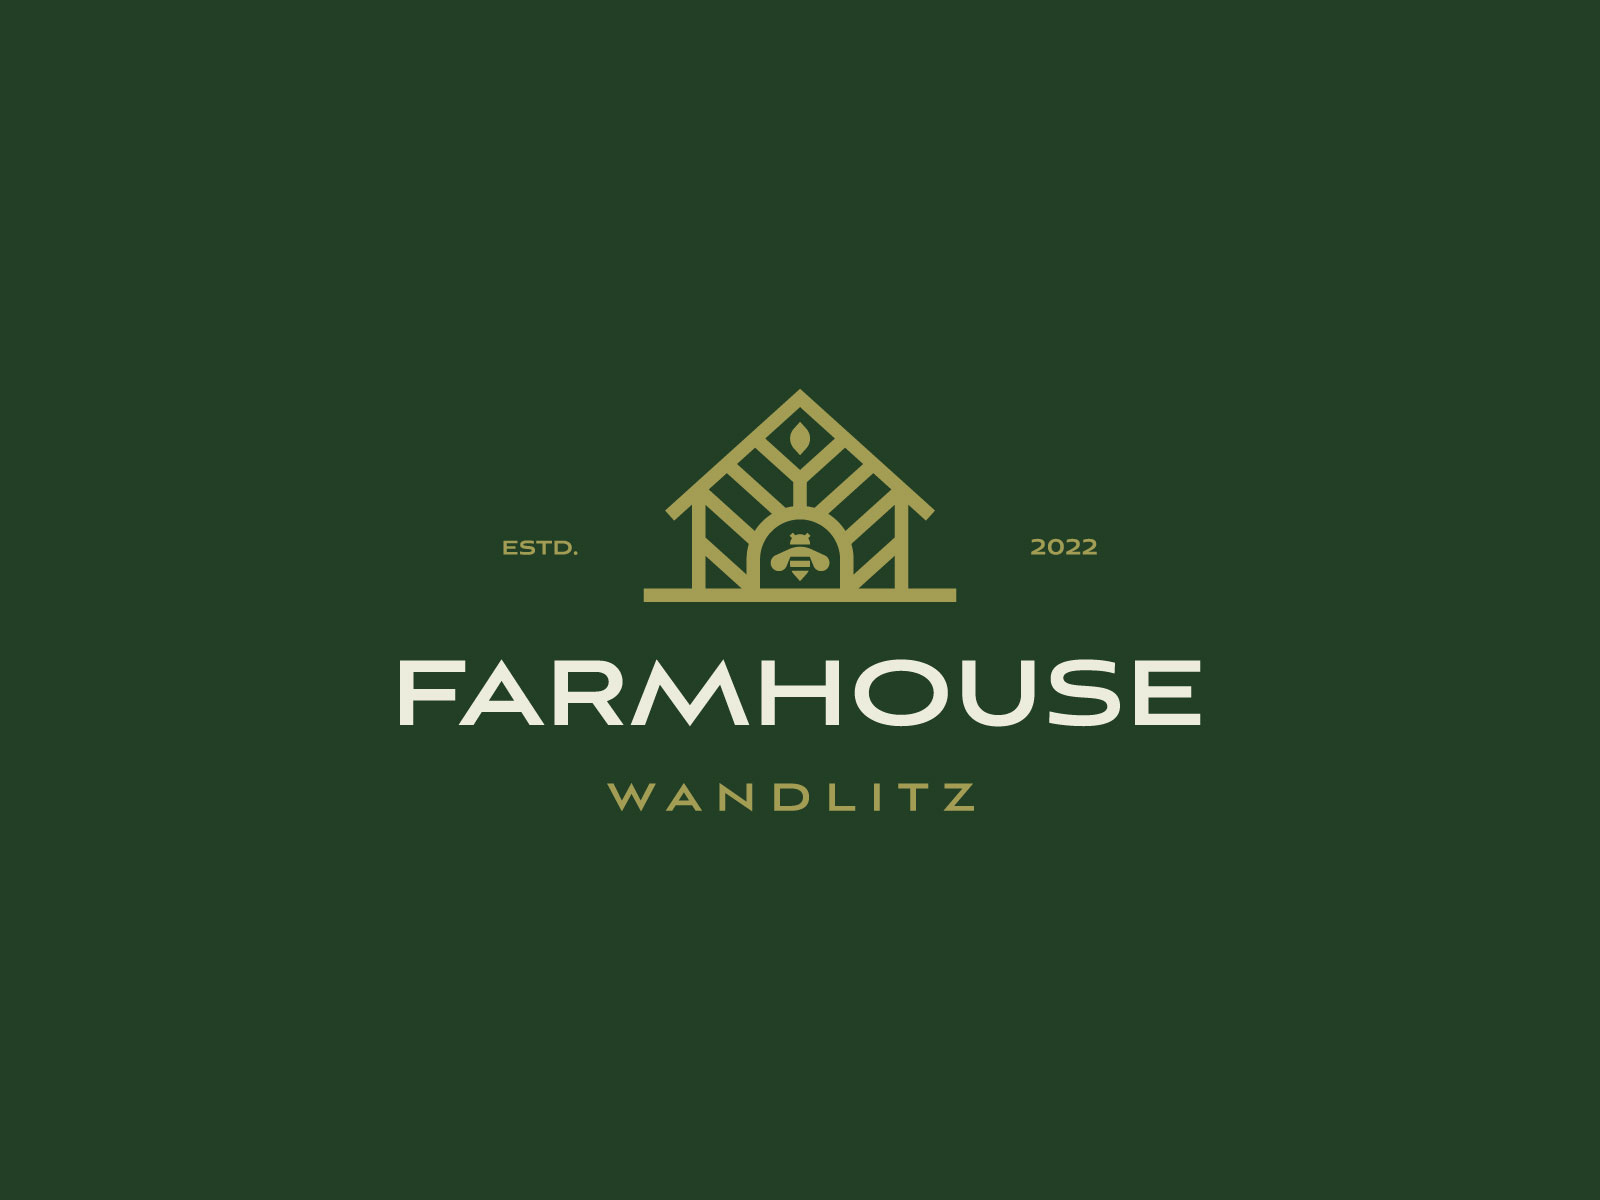 Design iowa farmhouse logo in 1 day by Robertstull612 | Fiverr